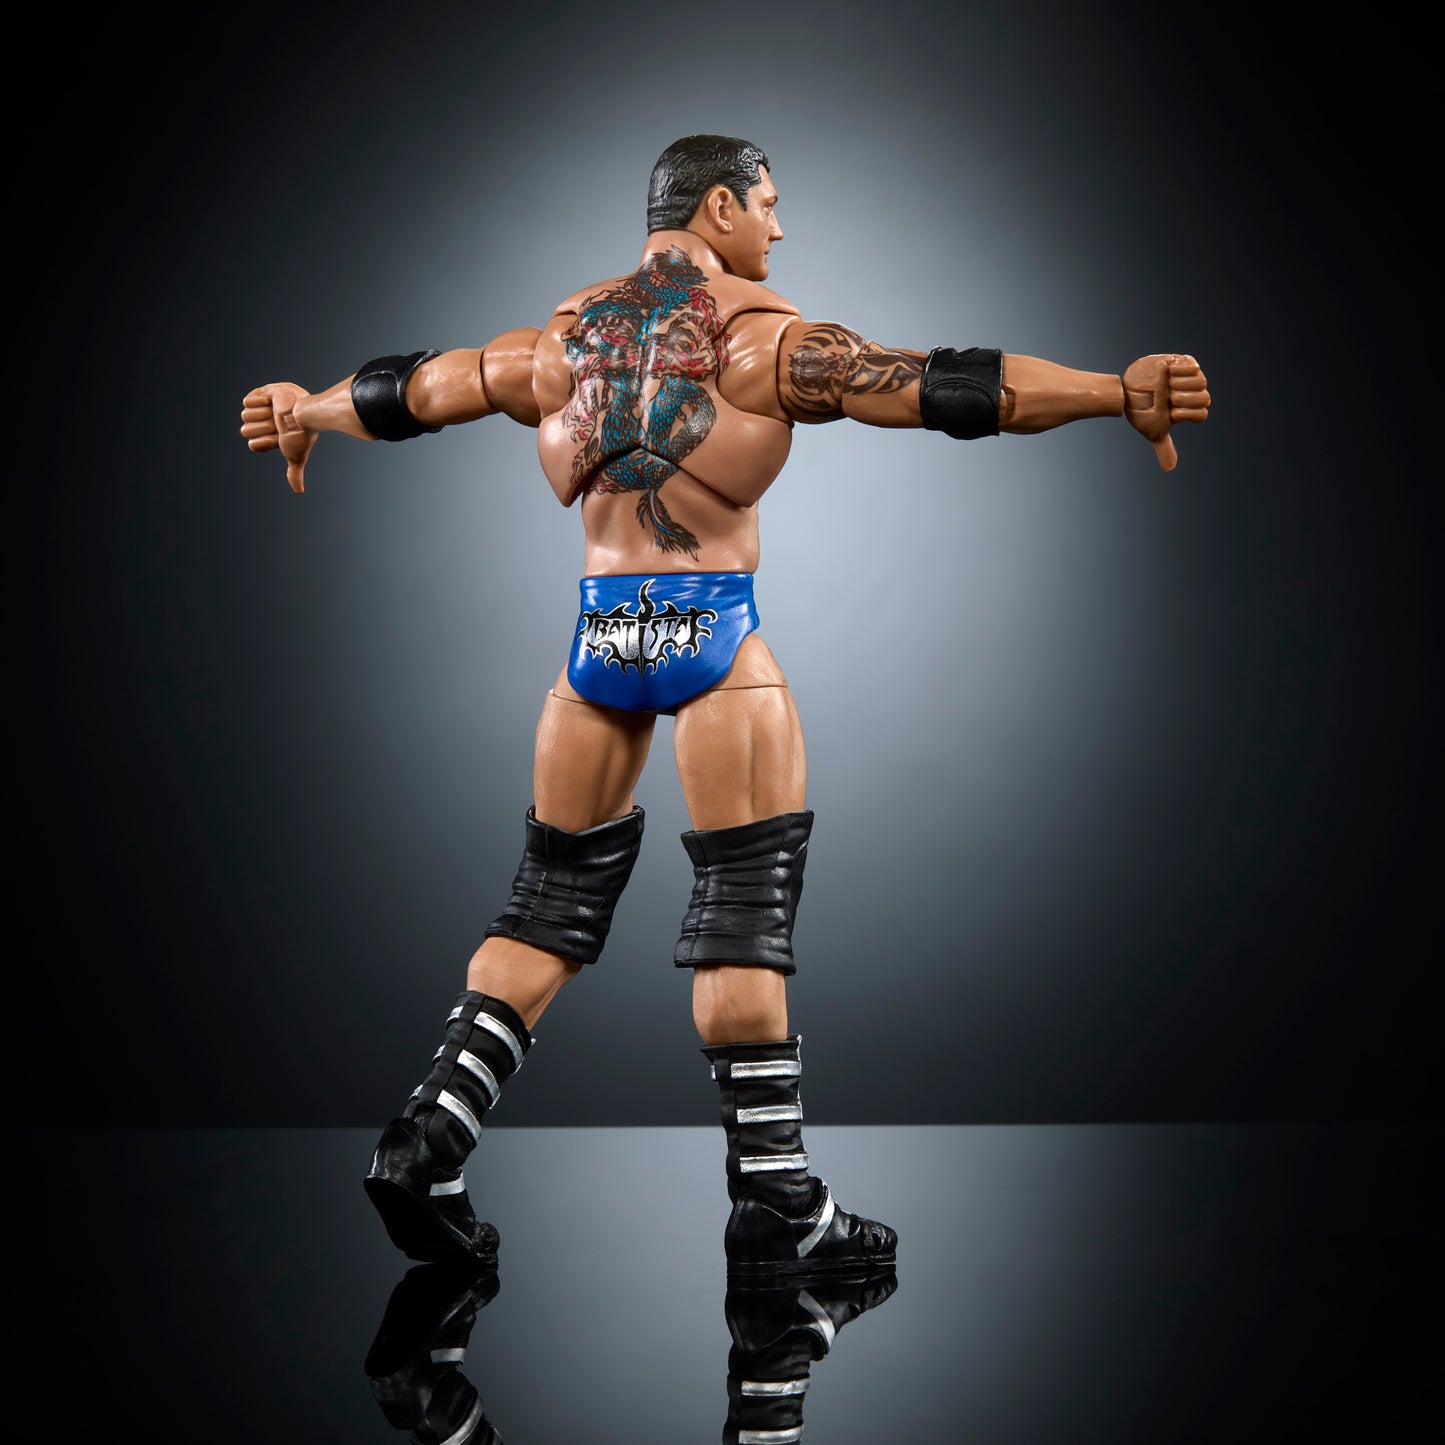 2024 WWE Mattel Ultimate Edition Greatest Hits Series 4 Batista